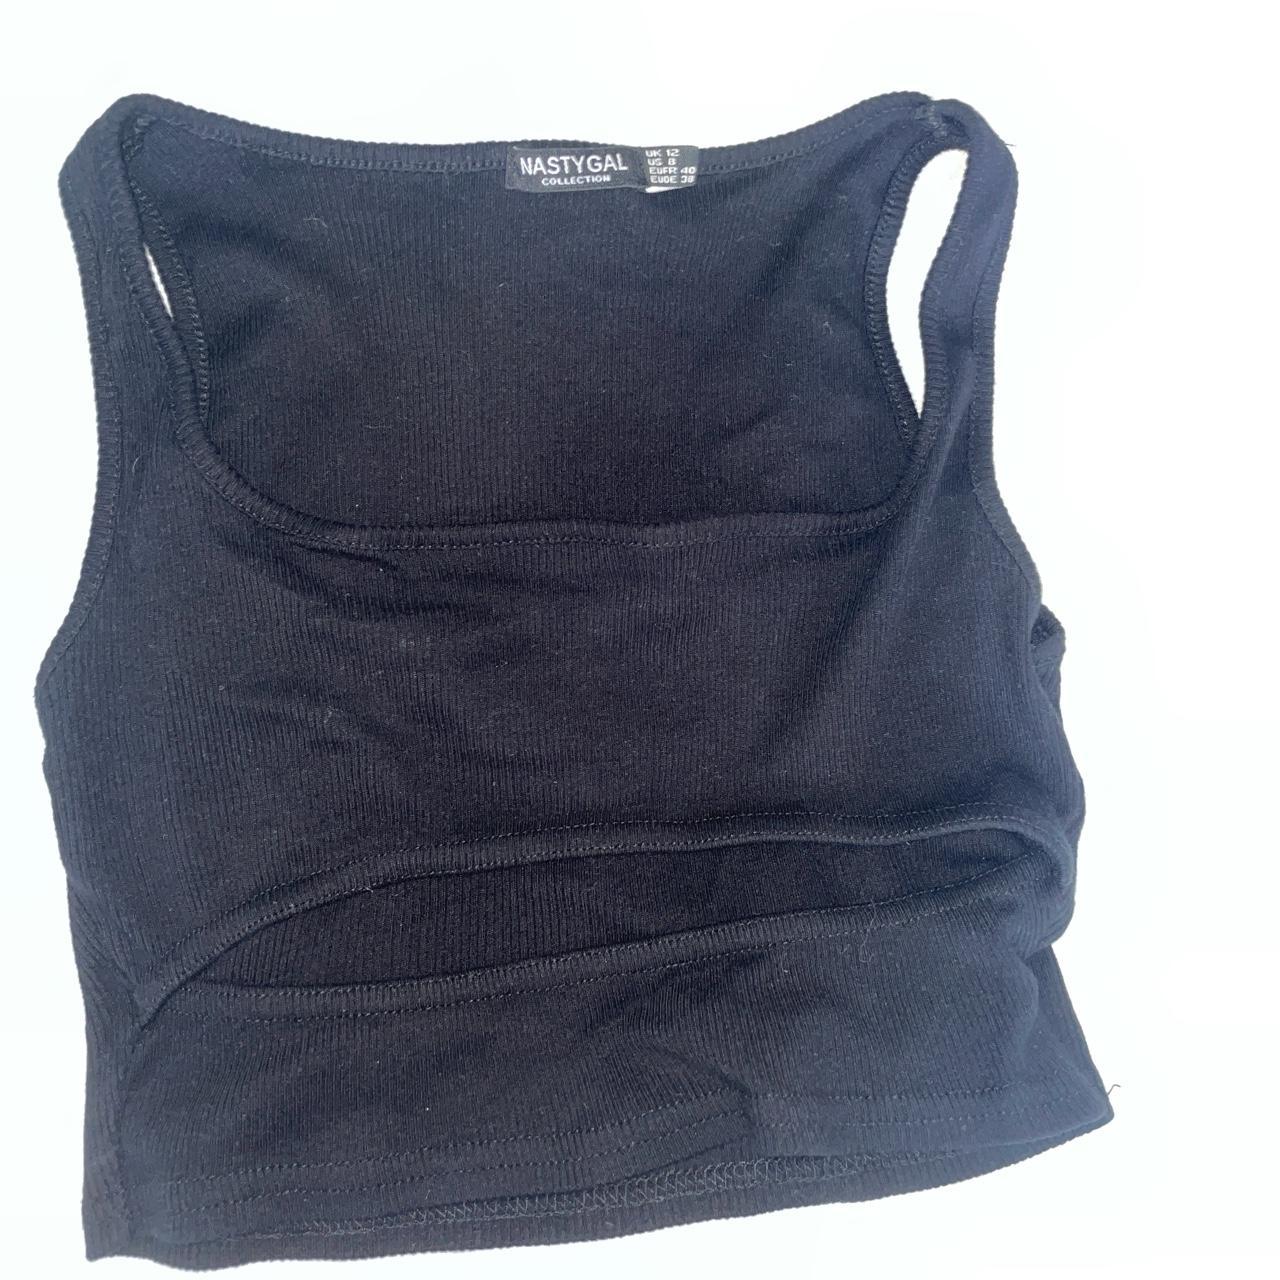 nasty gal black underboob vest top #nastygal #vesttop - Depop